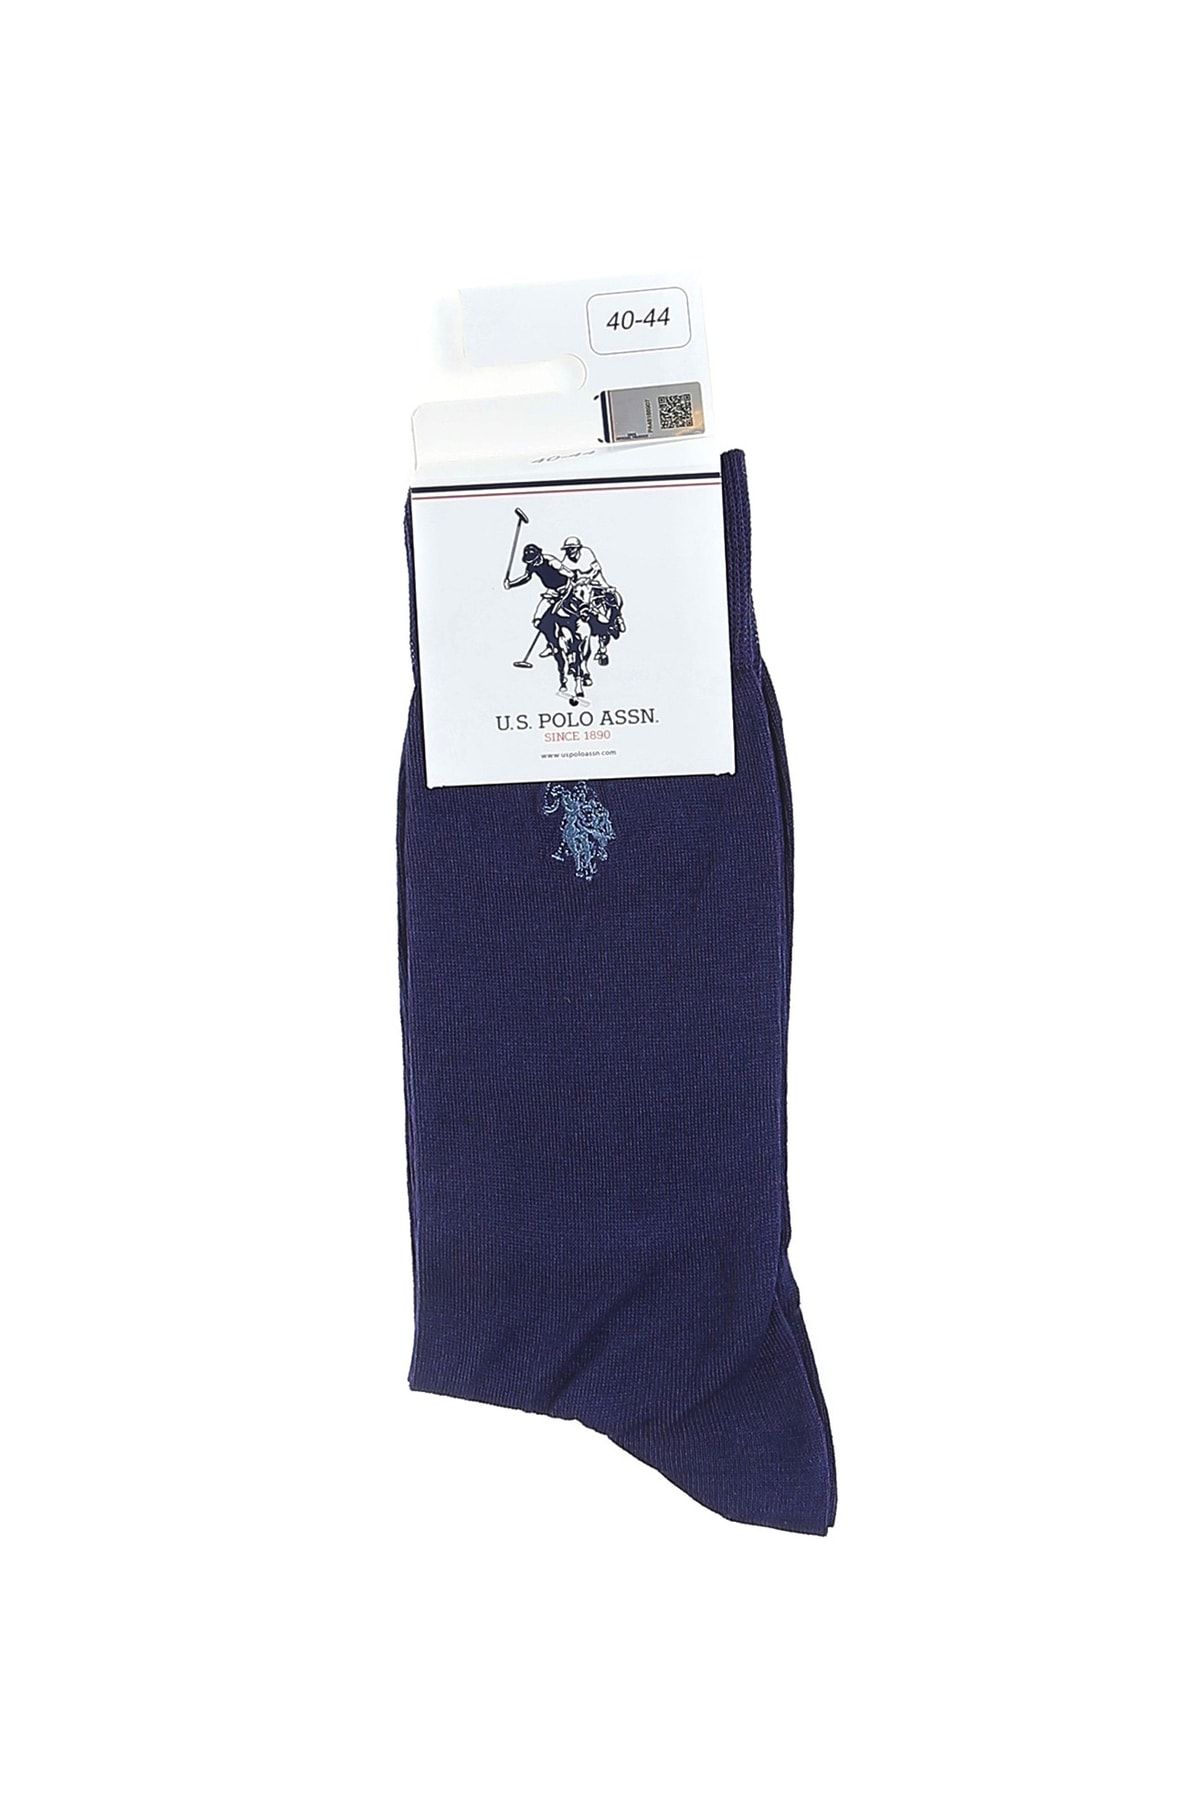 U.S. Polo Assn. 1 Adet Lacivert Erkek Çorap Tekli Paket